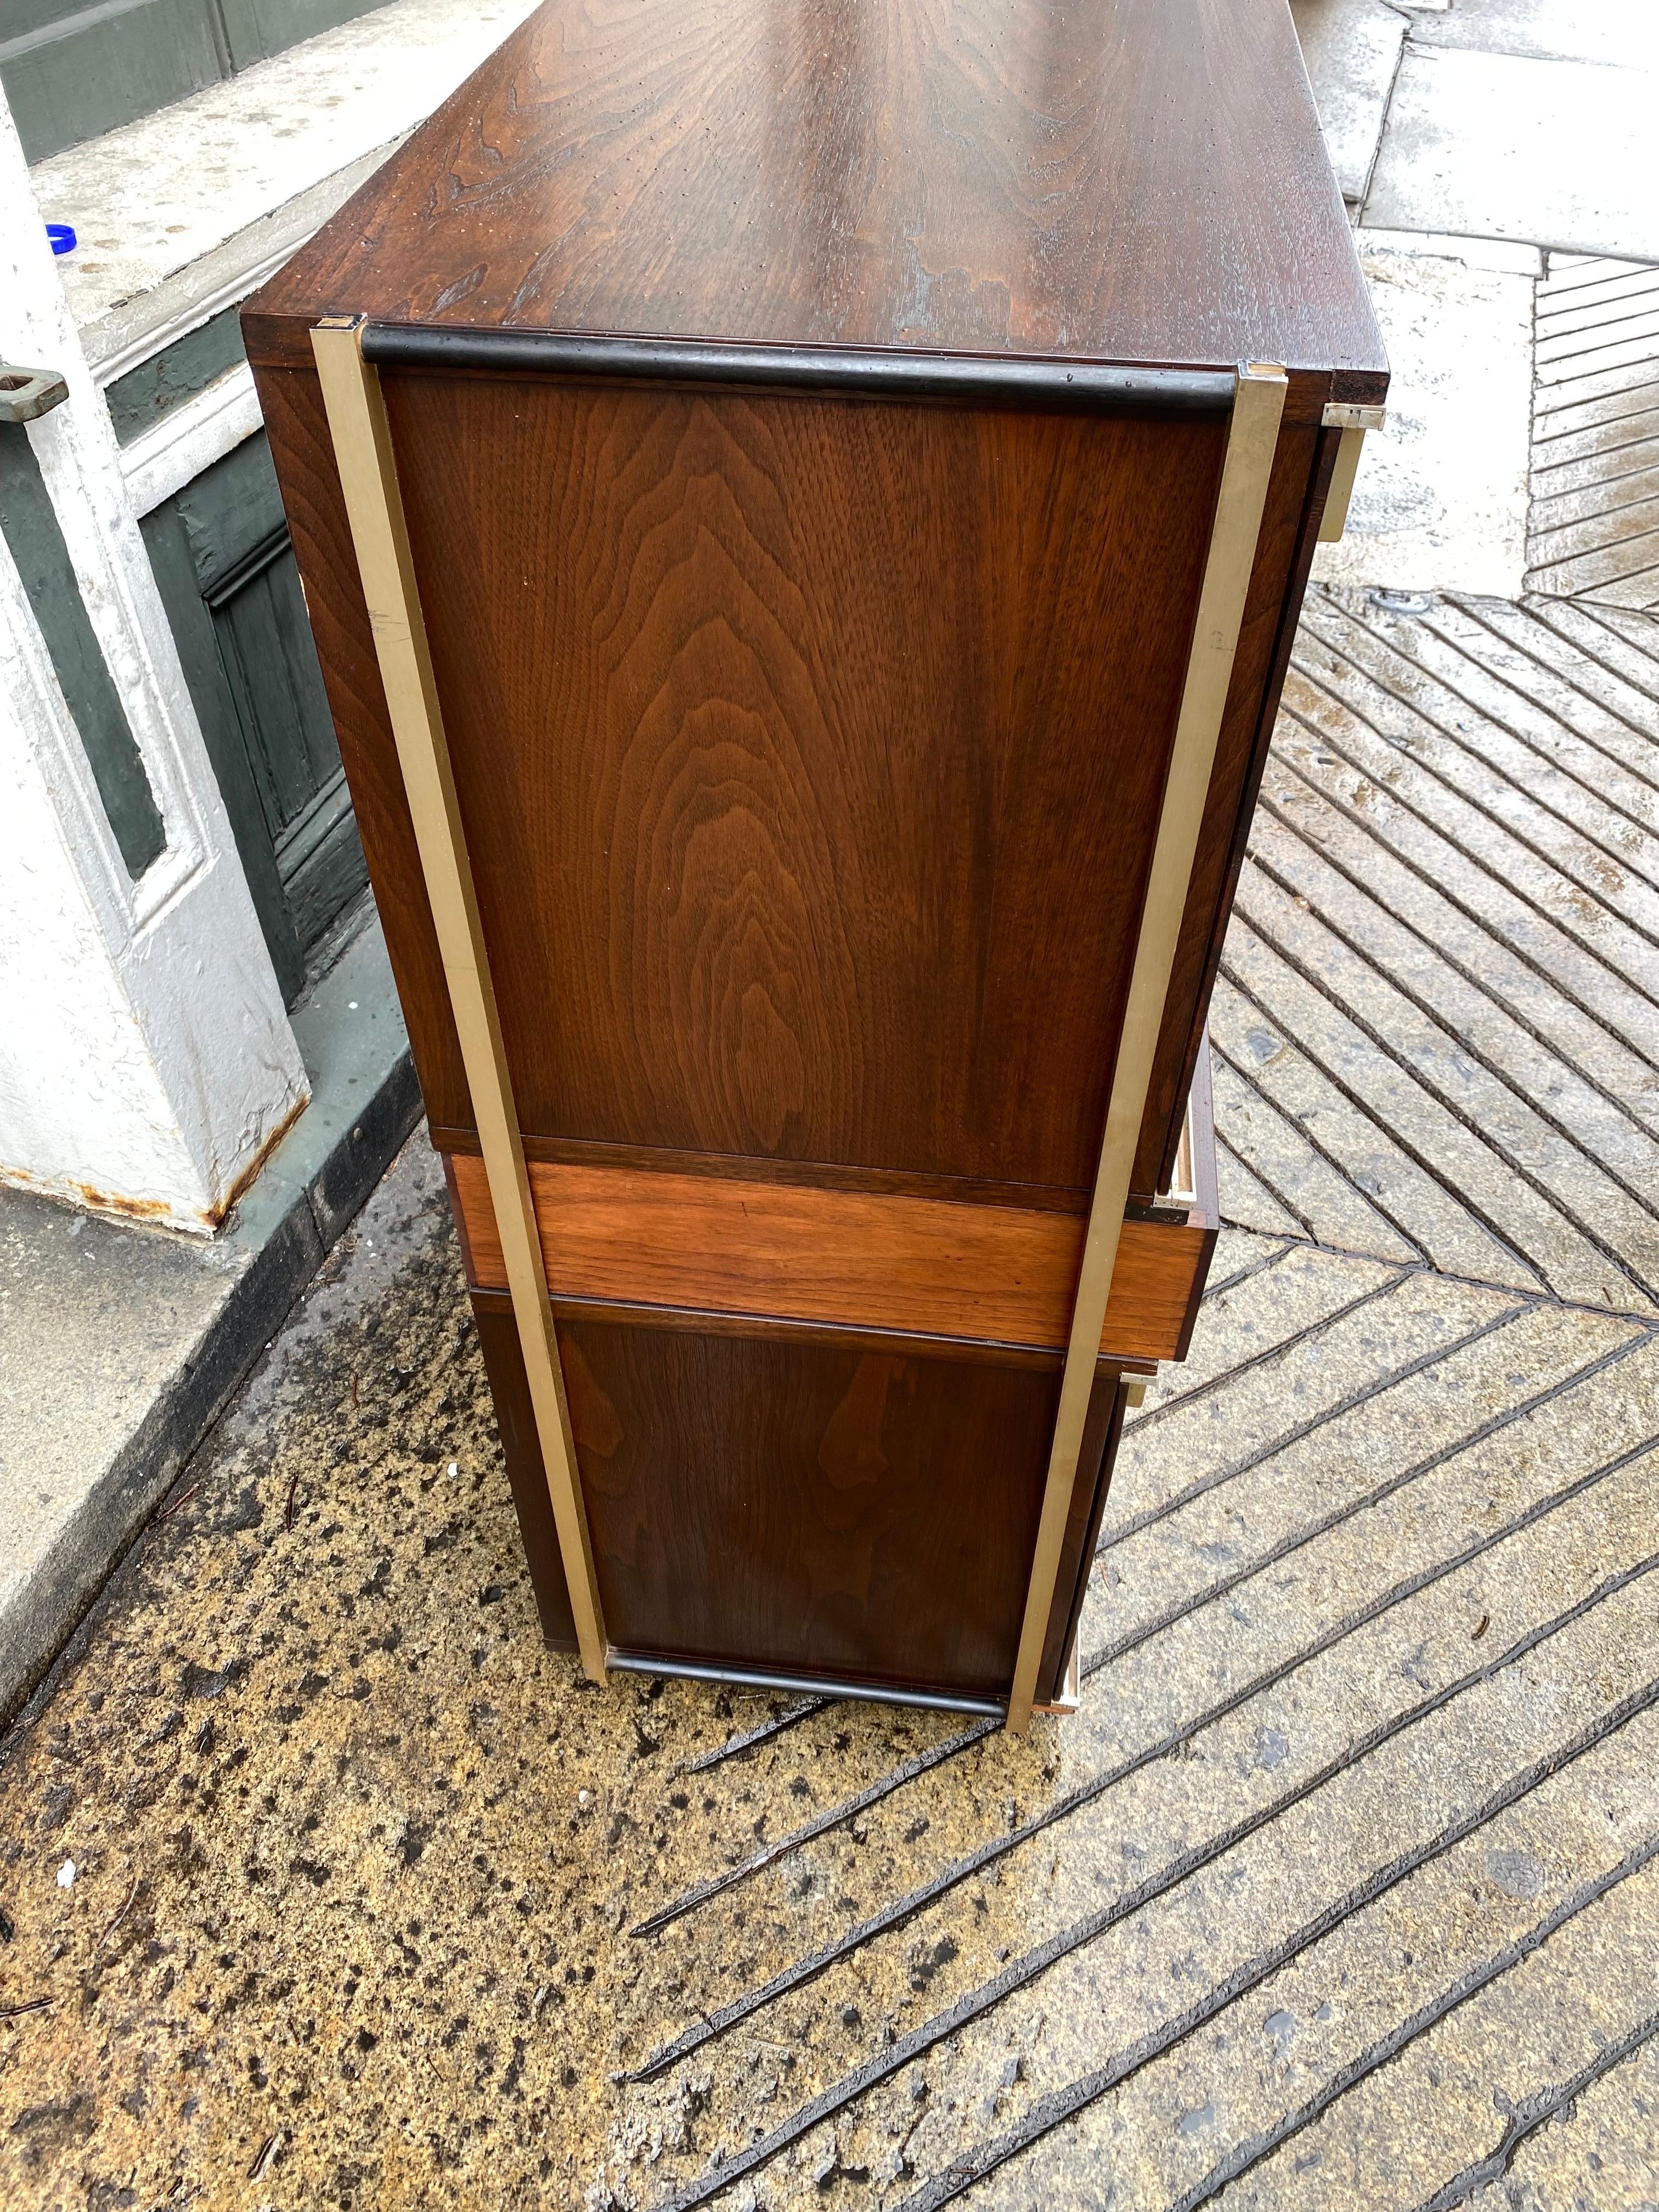 Hugh Acton Sliding Door Cabinet In Good Condition For Sale In Philadelphia, PA